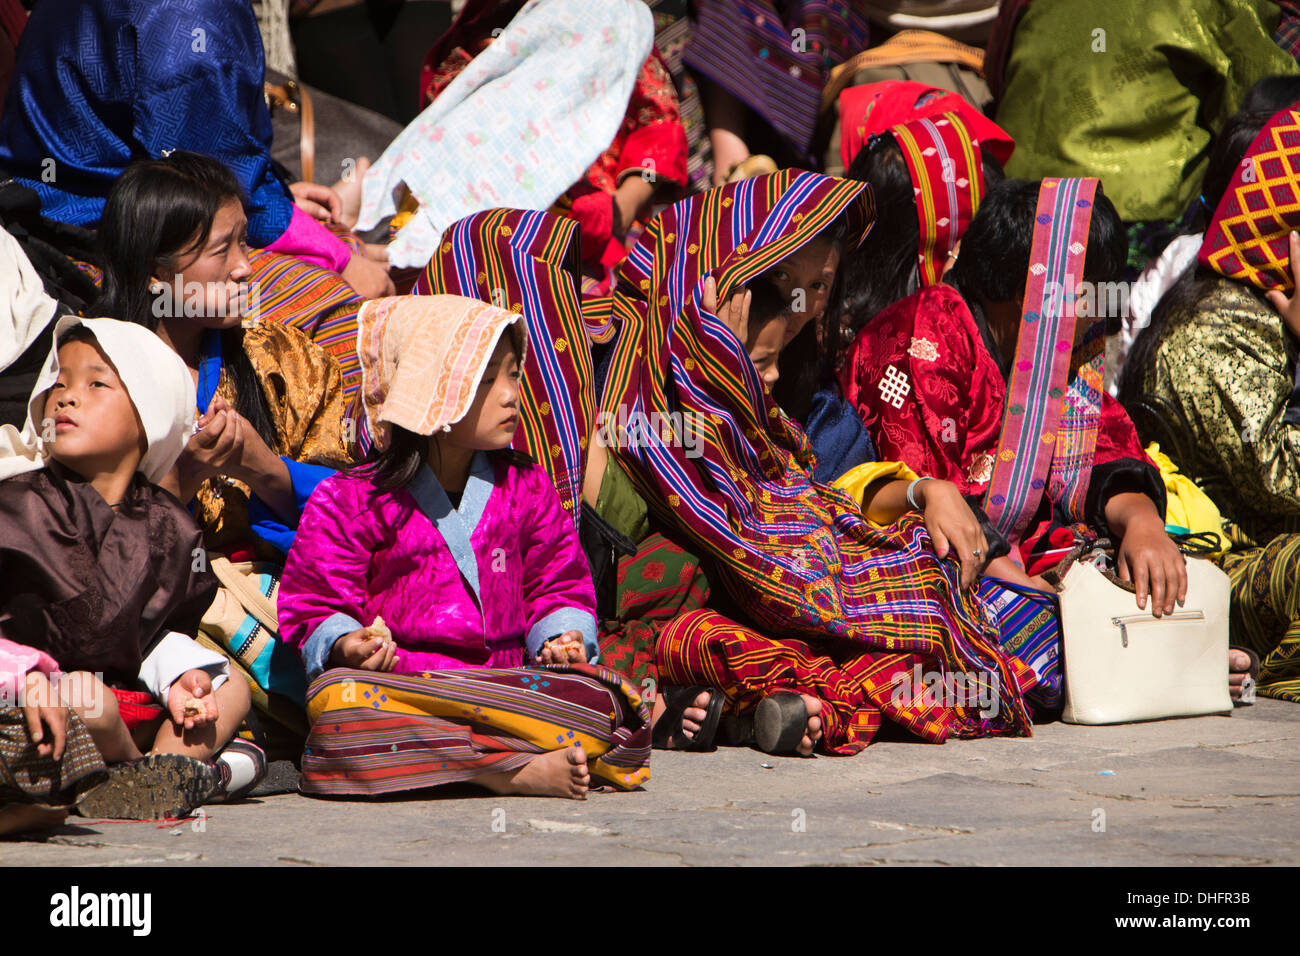 Bhutan, Thimpu Dzong, annual Tsechu, festival audience dressed in Bhutanese national dress Stock Photo